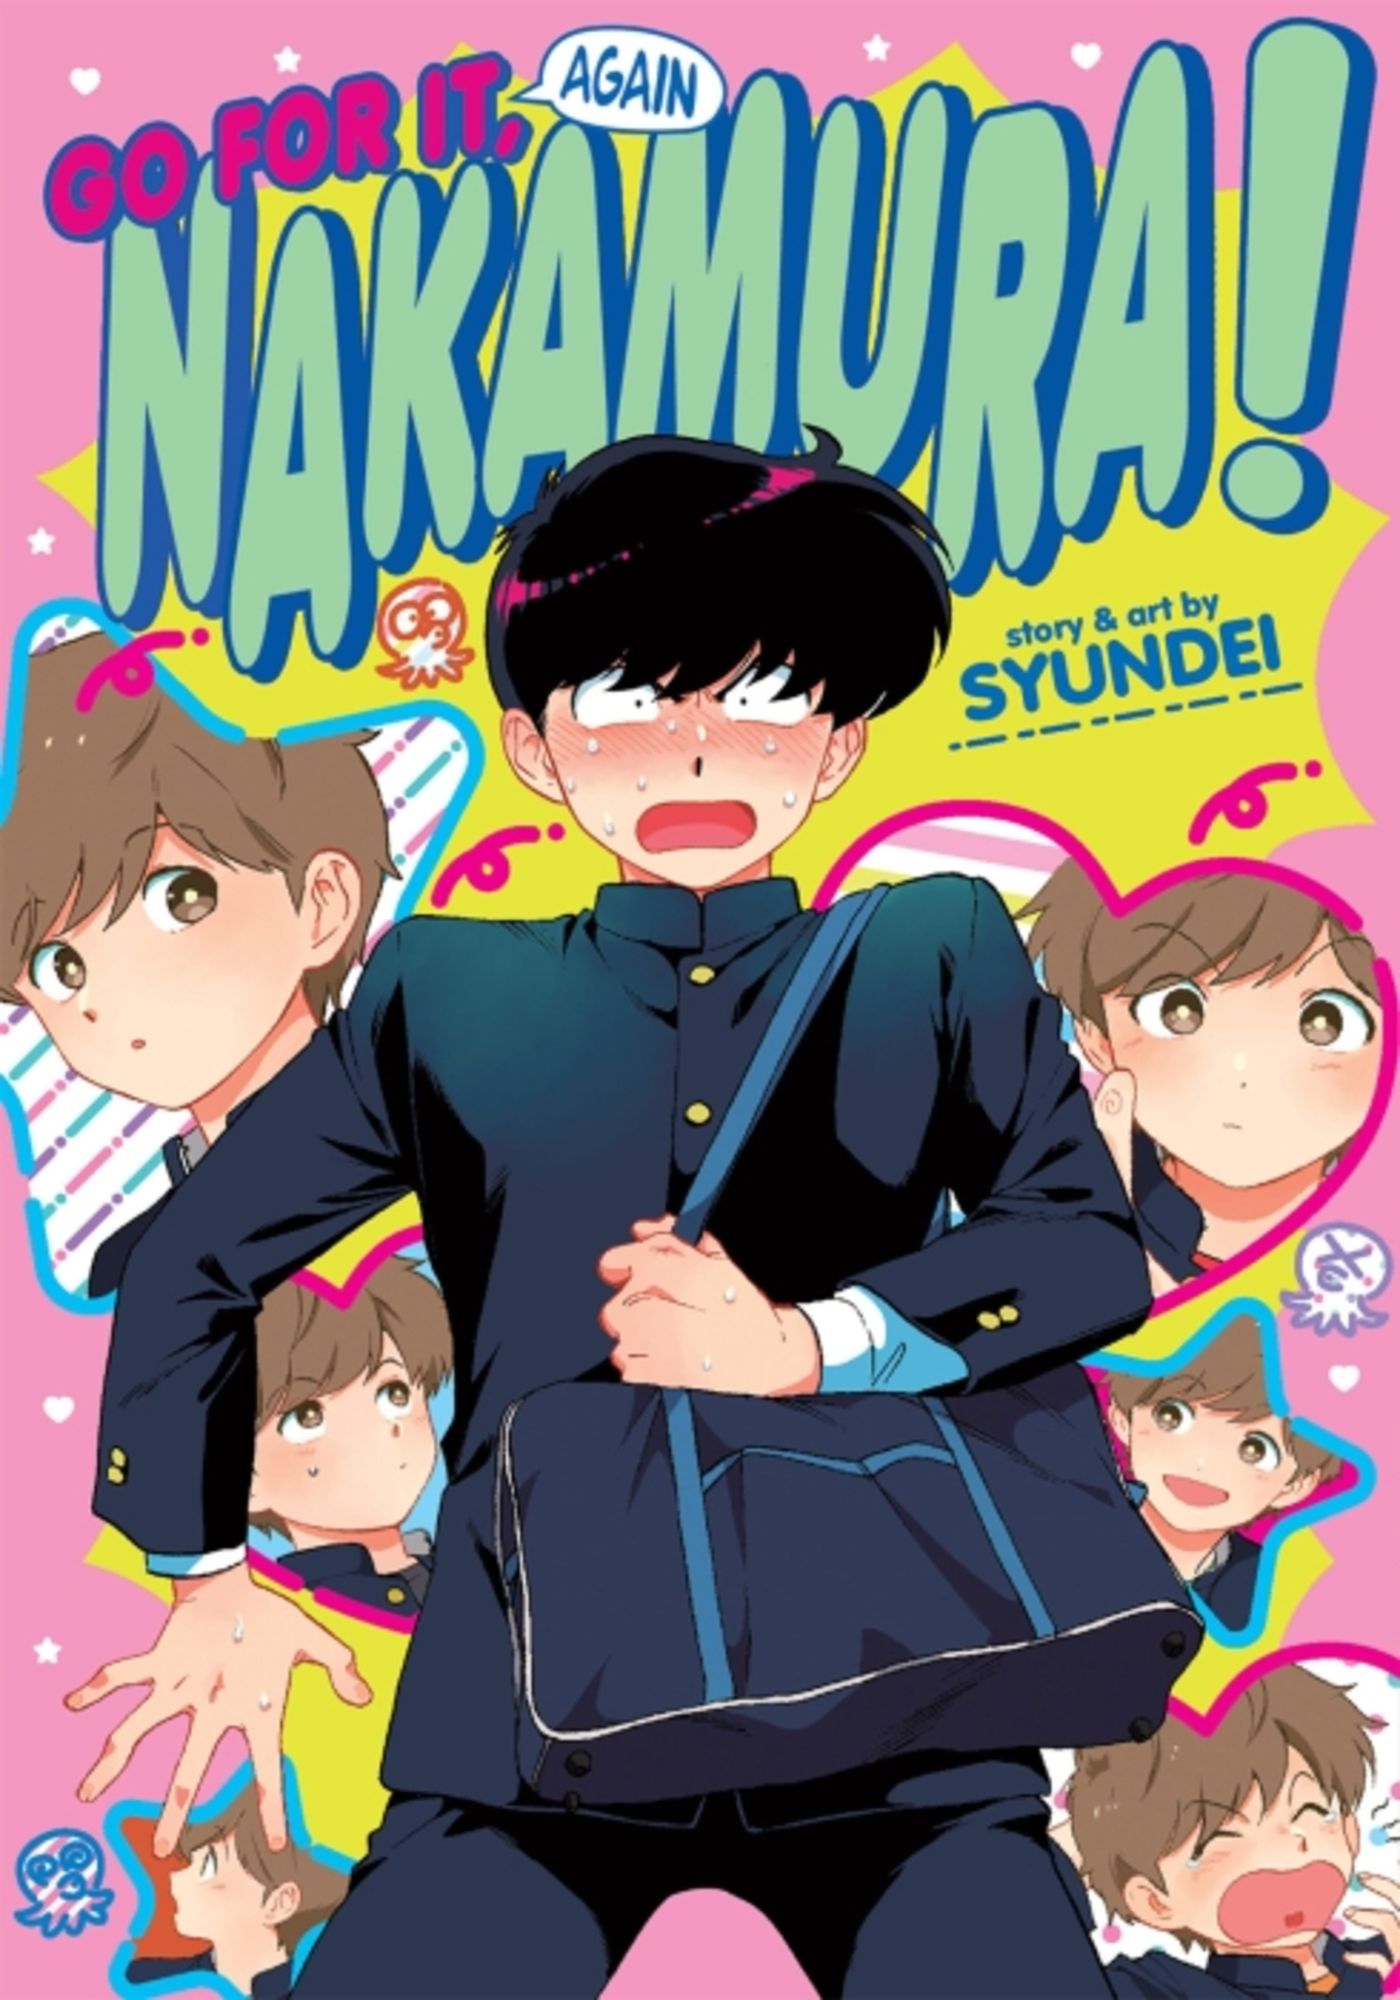 Go For It Nakamura Manga Go For It Again, Nakamura!! 02' von 'Syundei' - 'Taschenbuch' -  '978-1-63858-573-2'